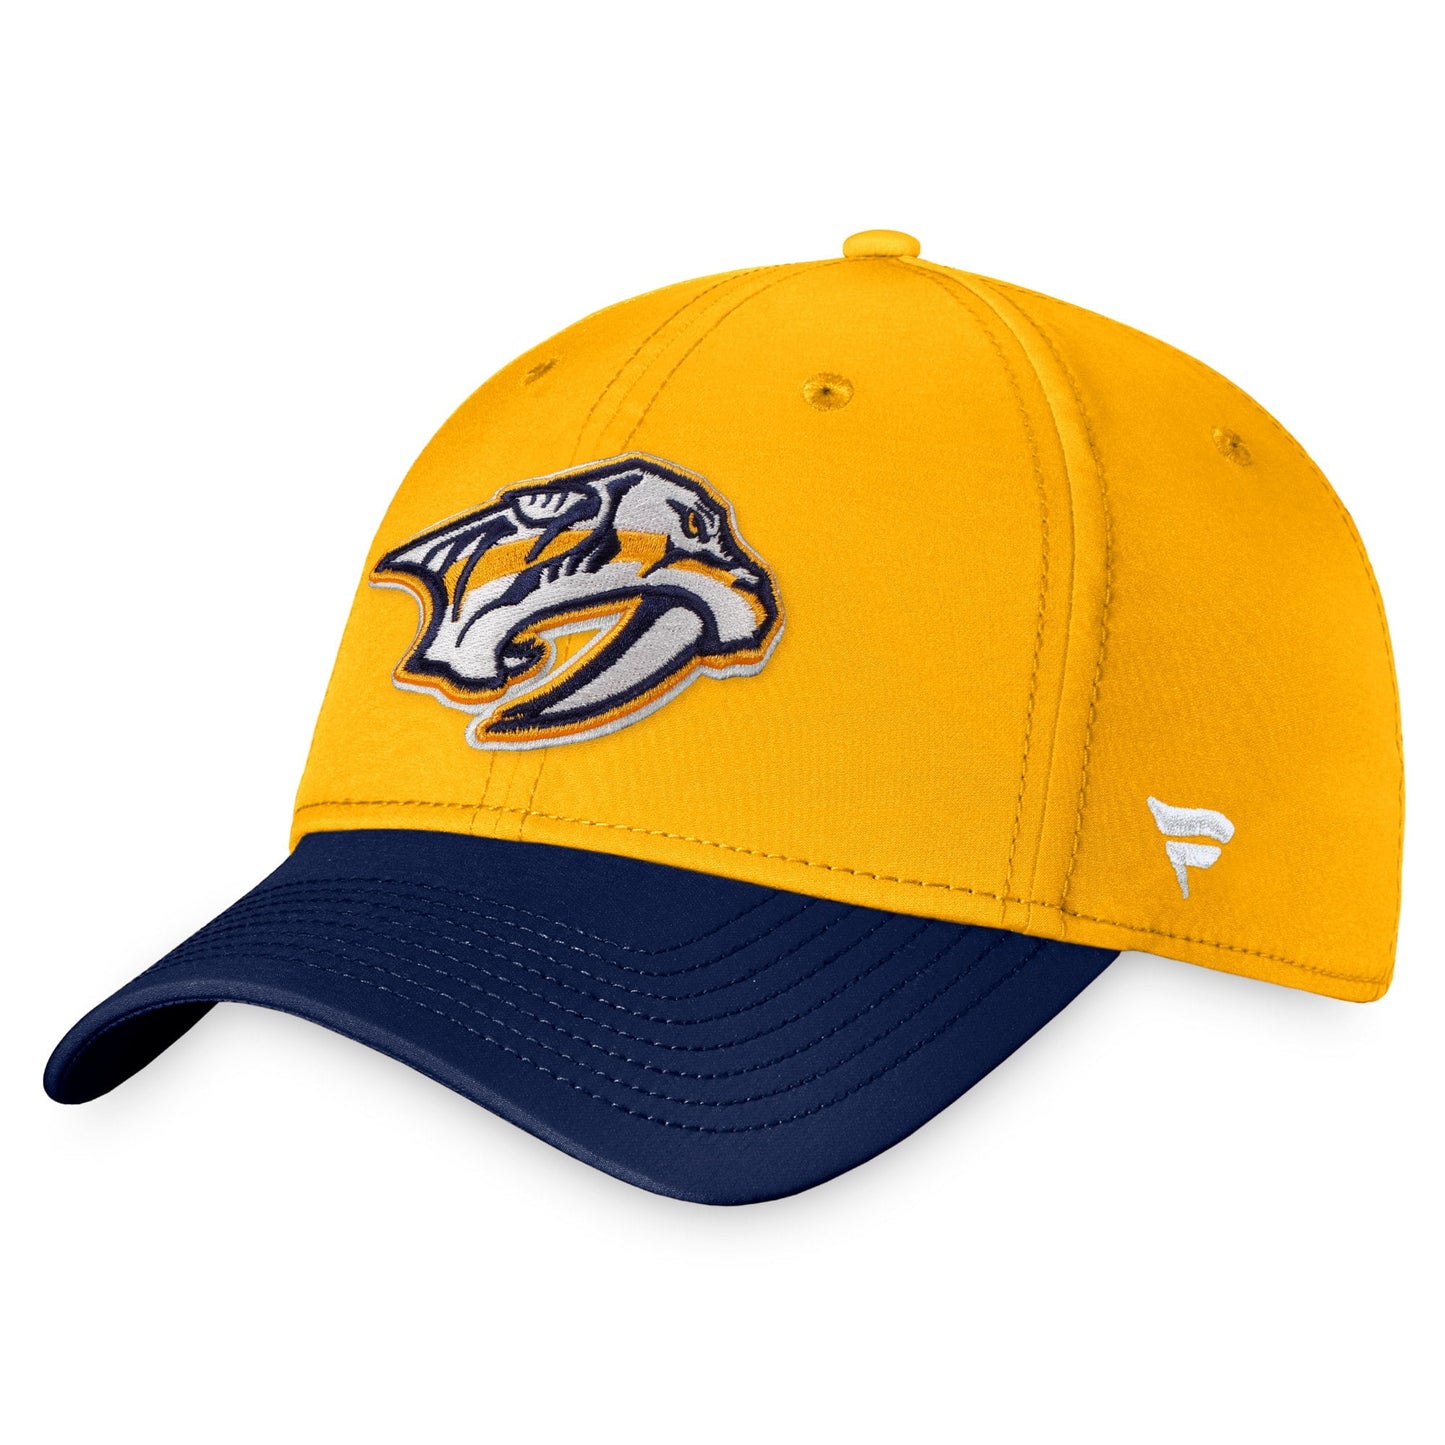 Men's Fanatics Branded Gold Nashville Predators Core Primary Logo Flex Hat